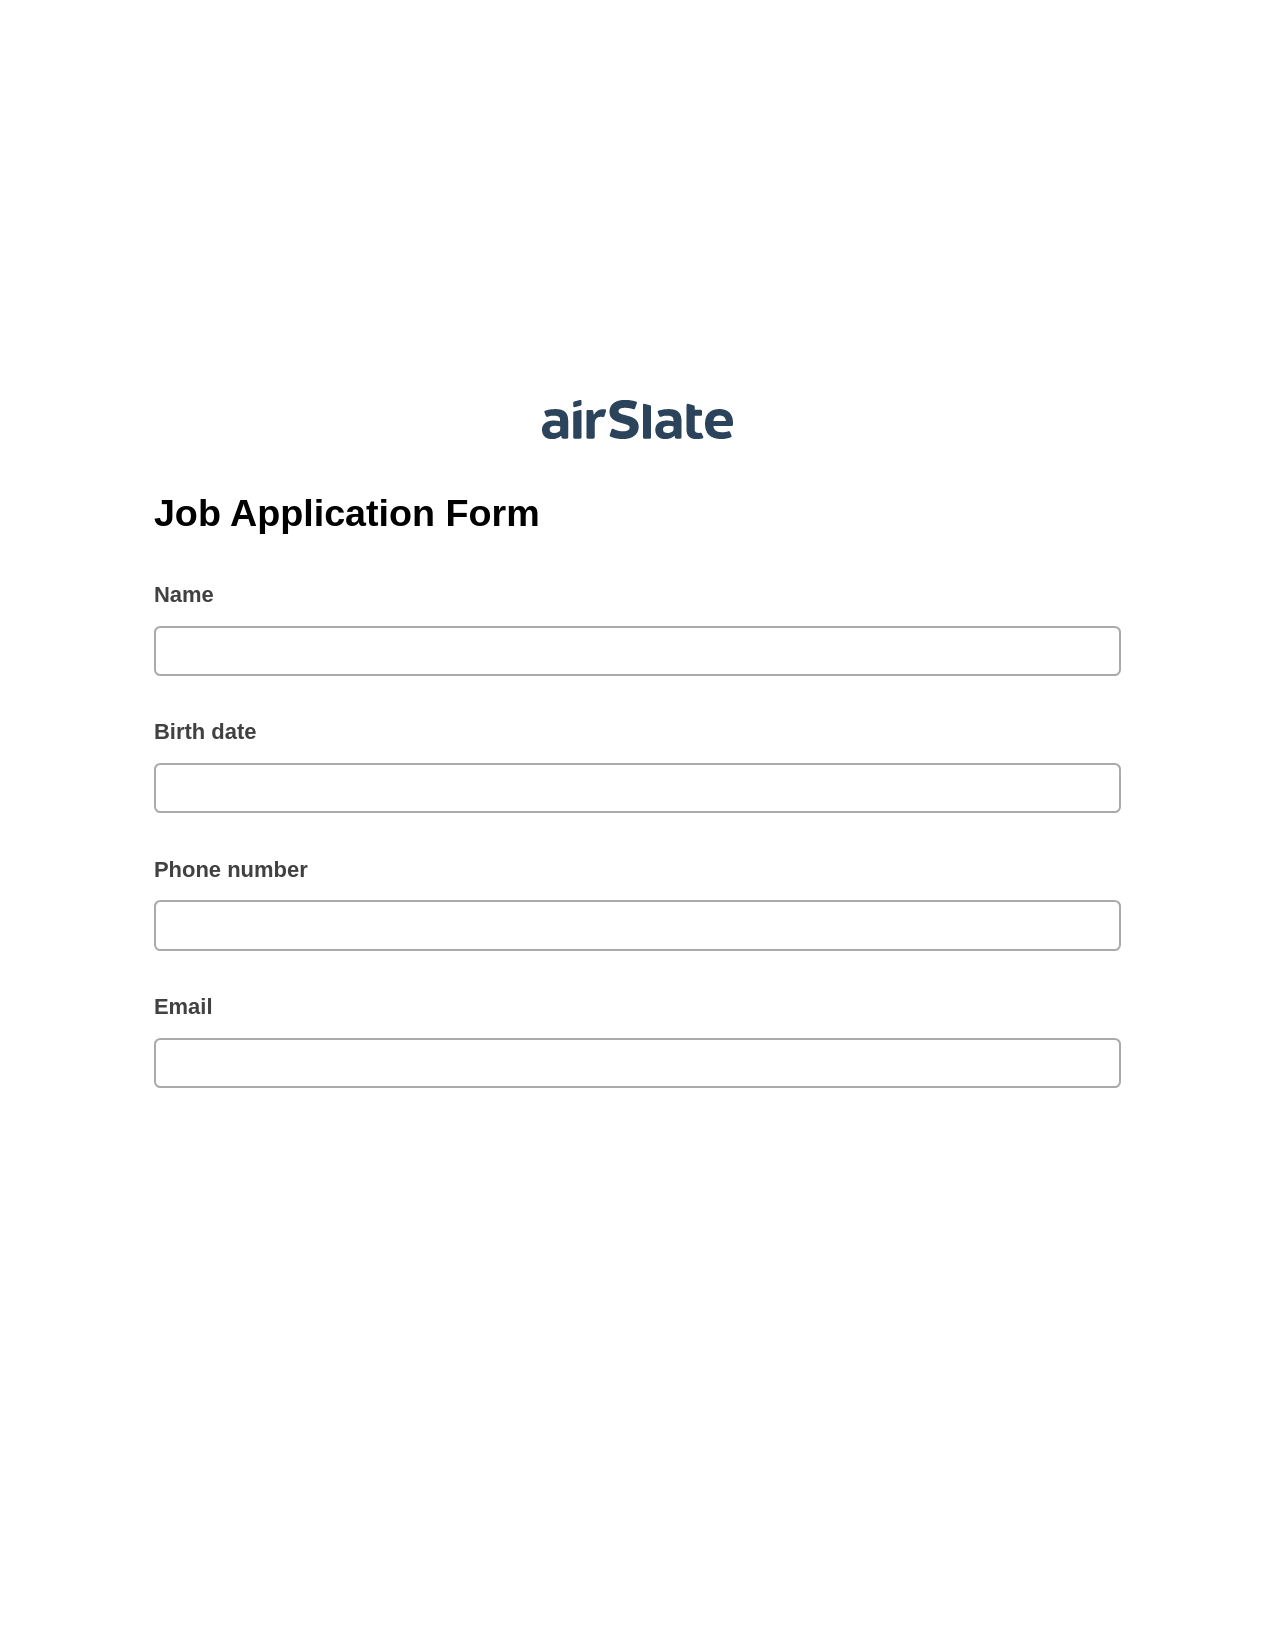 Multirole Job Application Form System Bot - Slack Two-Way Binding Bot, Assign Roles to Recipients Bot, Slack Notification Postfinish Bot